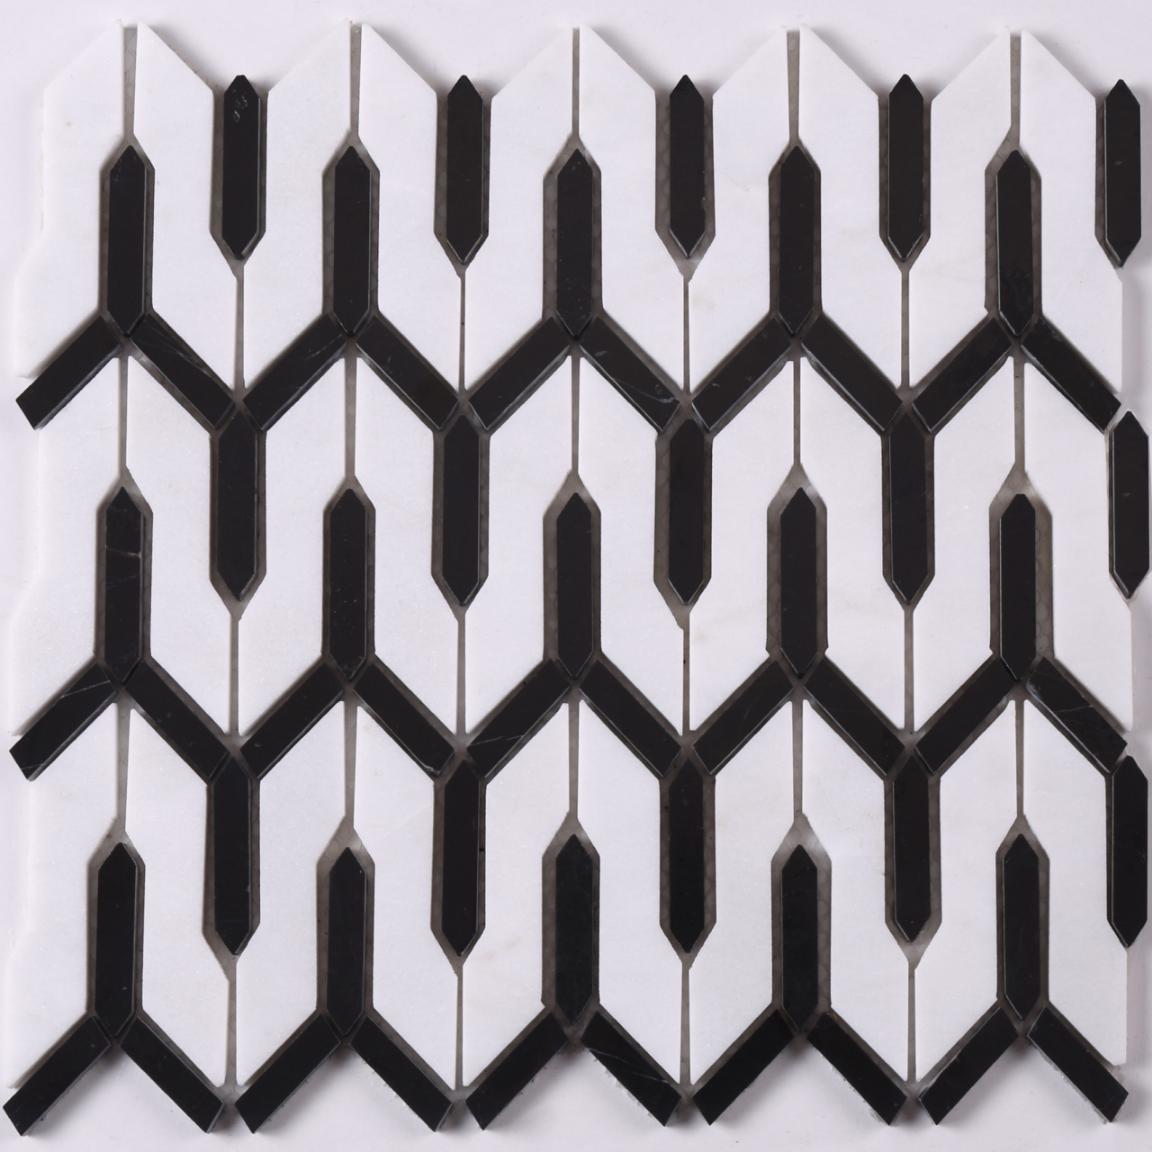 Heng Xing black decorative mosaic tiles design for kitchen-1